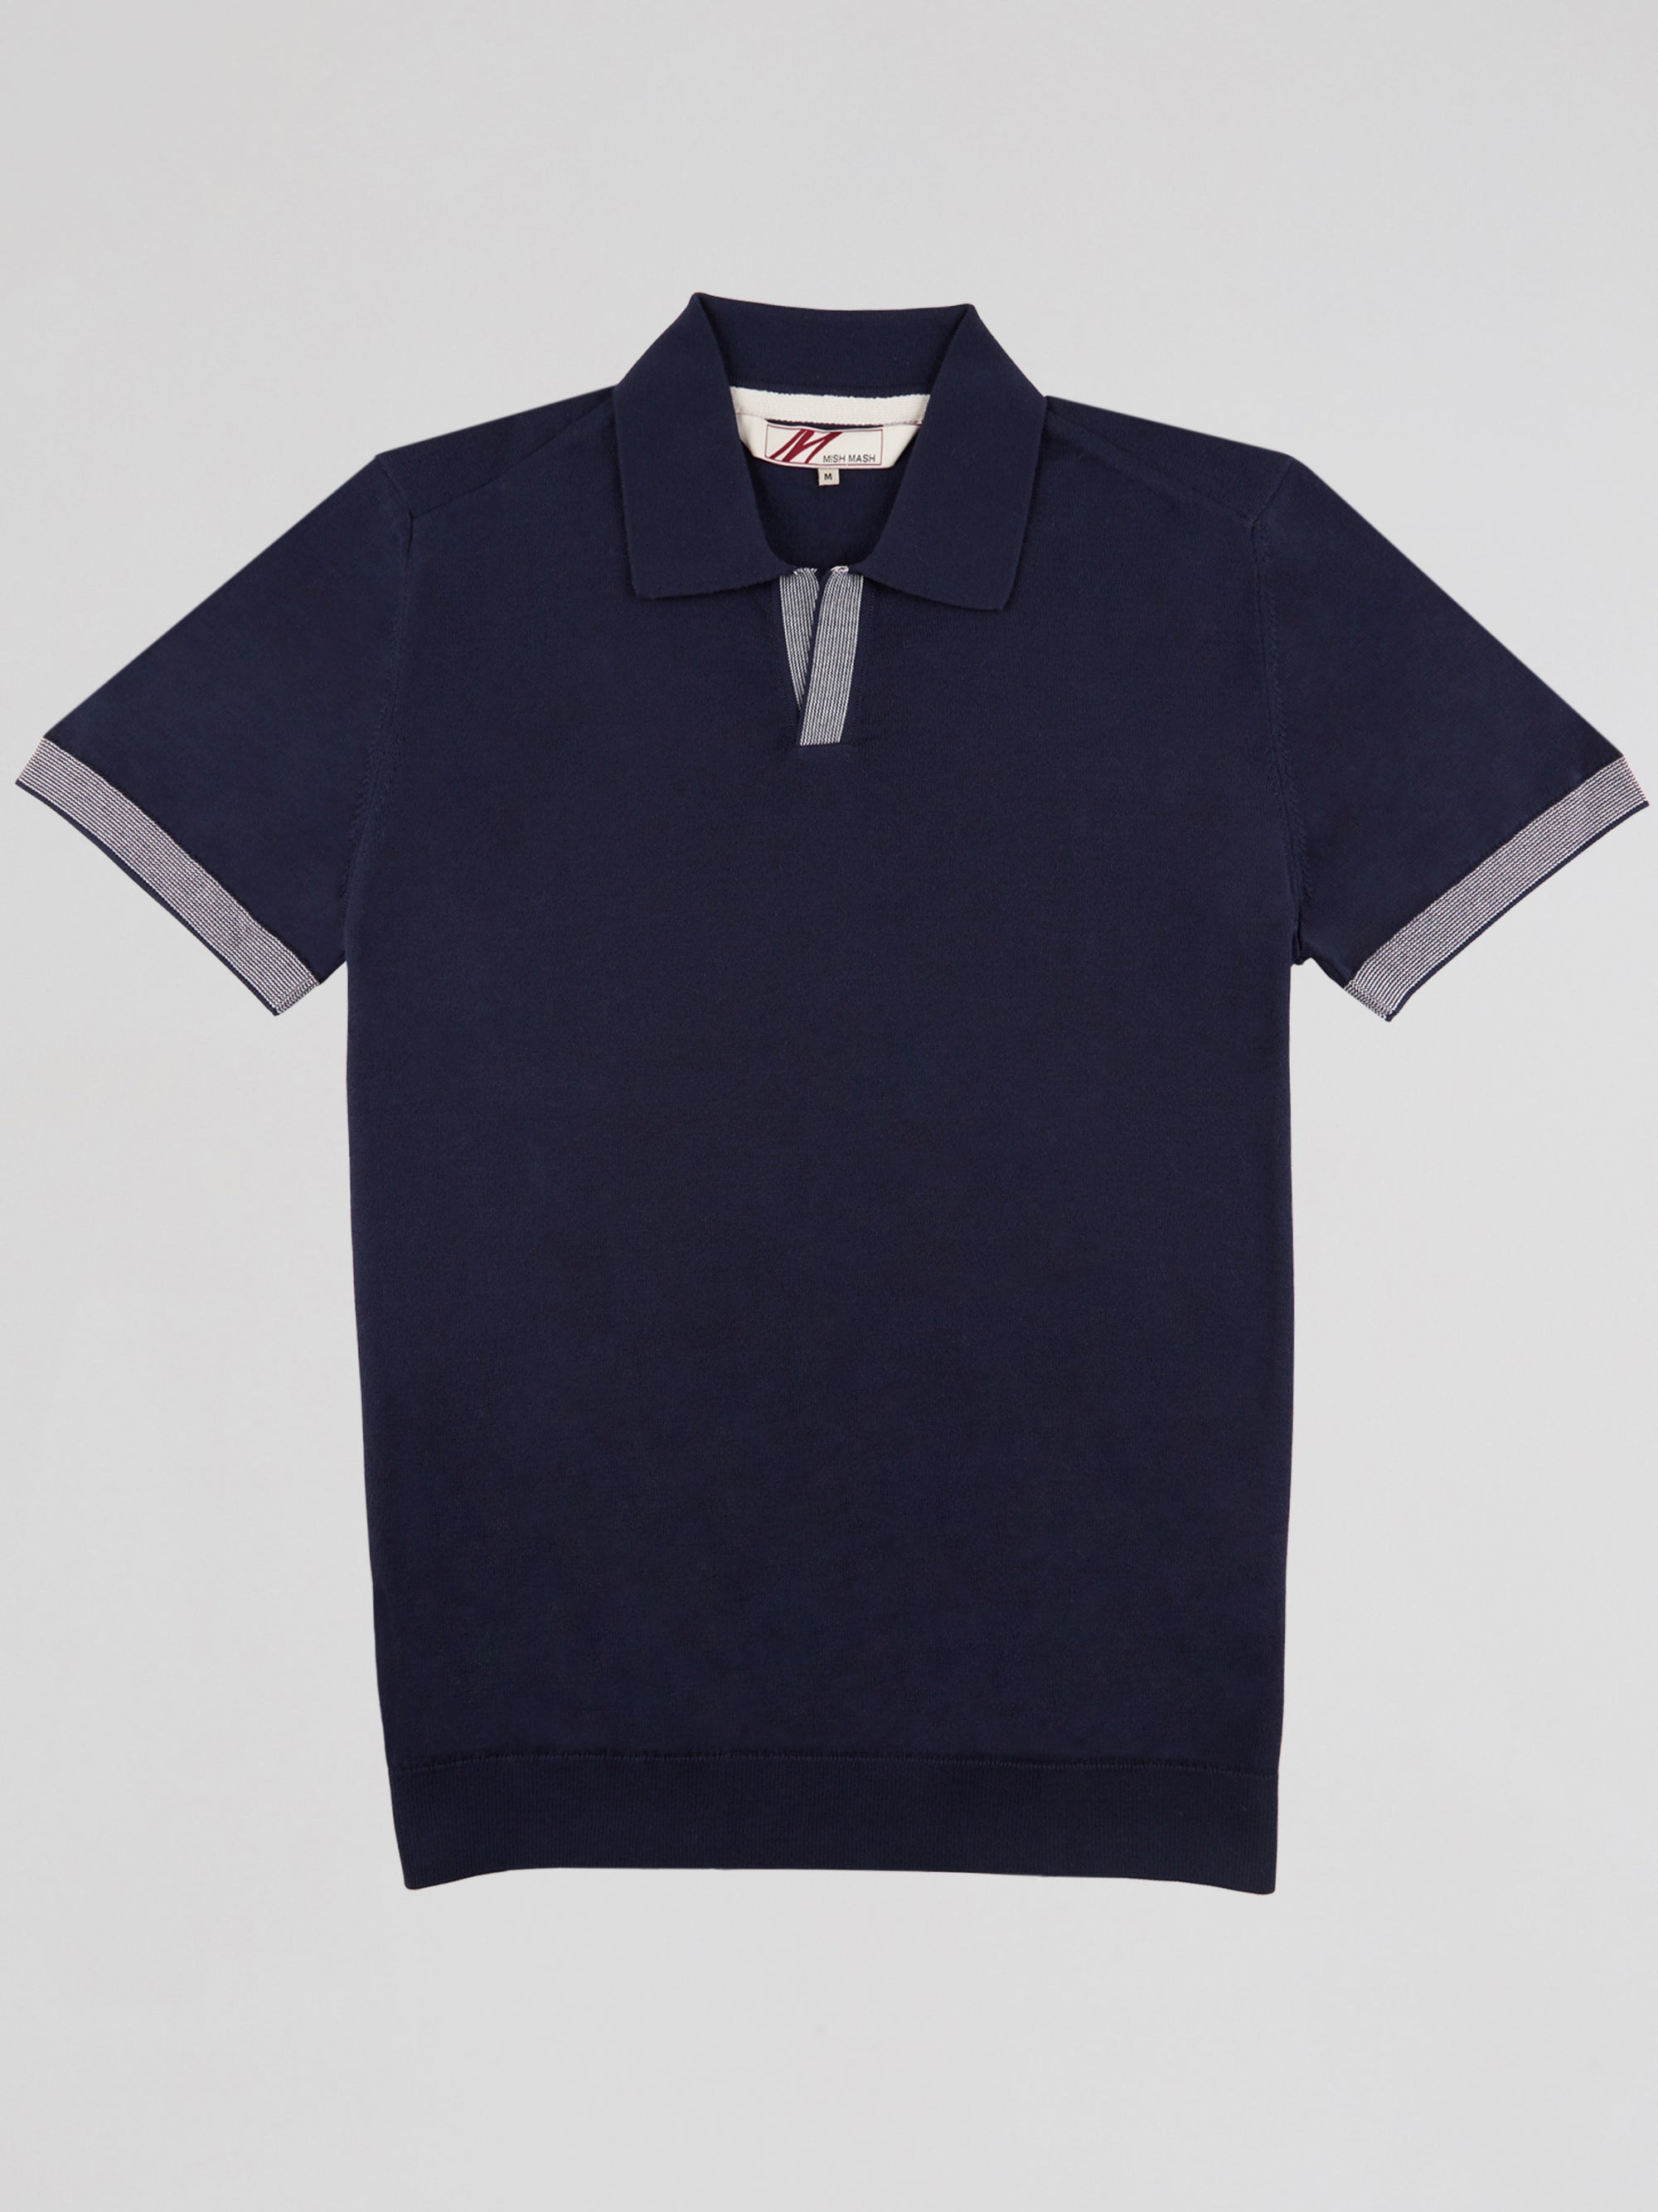 lynx-navy-resort-collar-mens-short-sleeve-knitted-polo-shirt-mish-mash